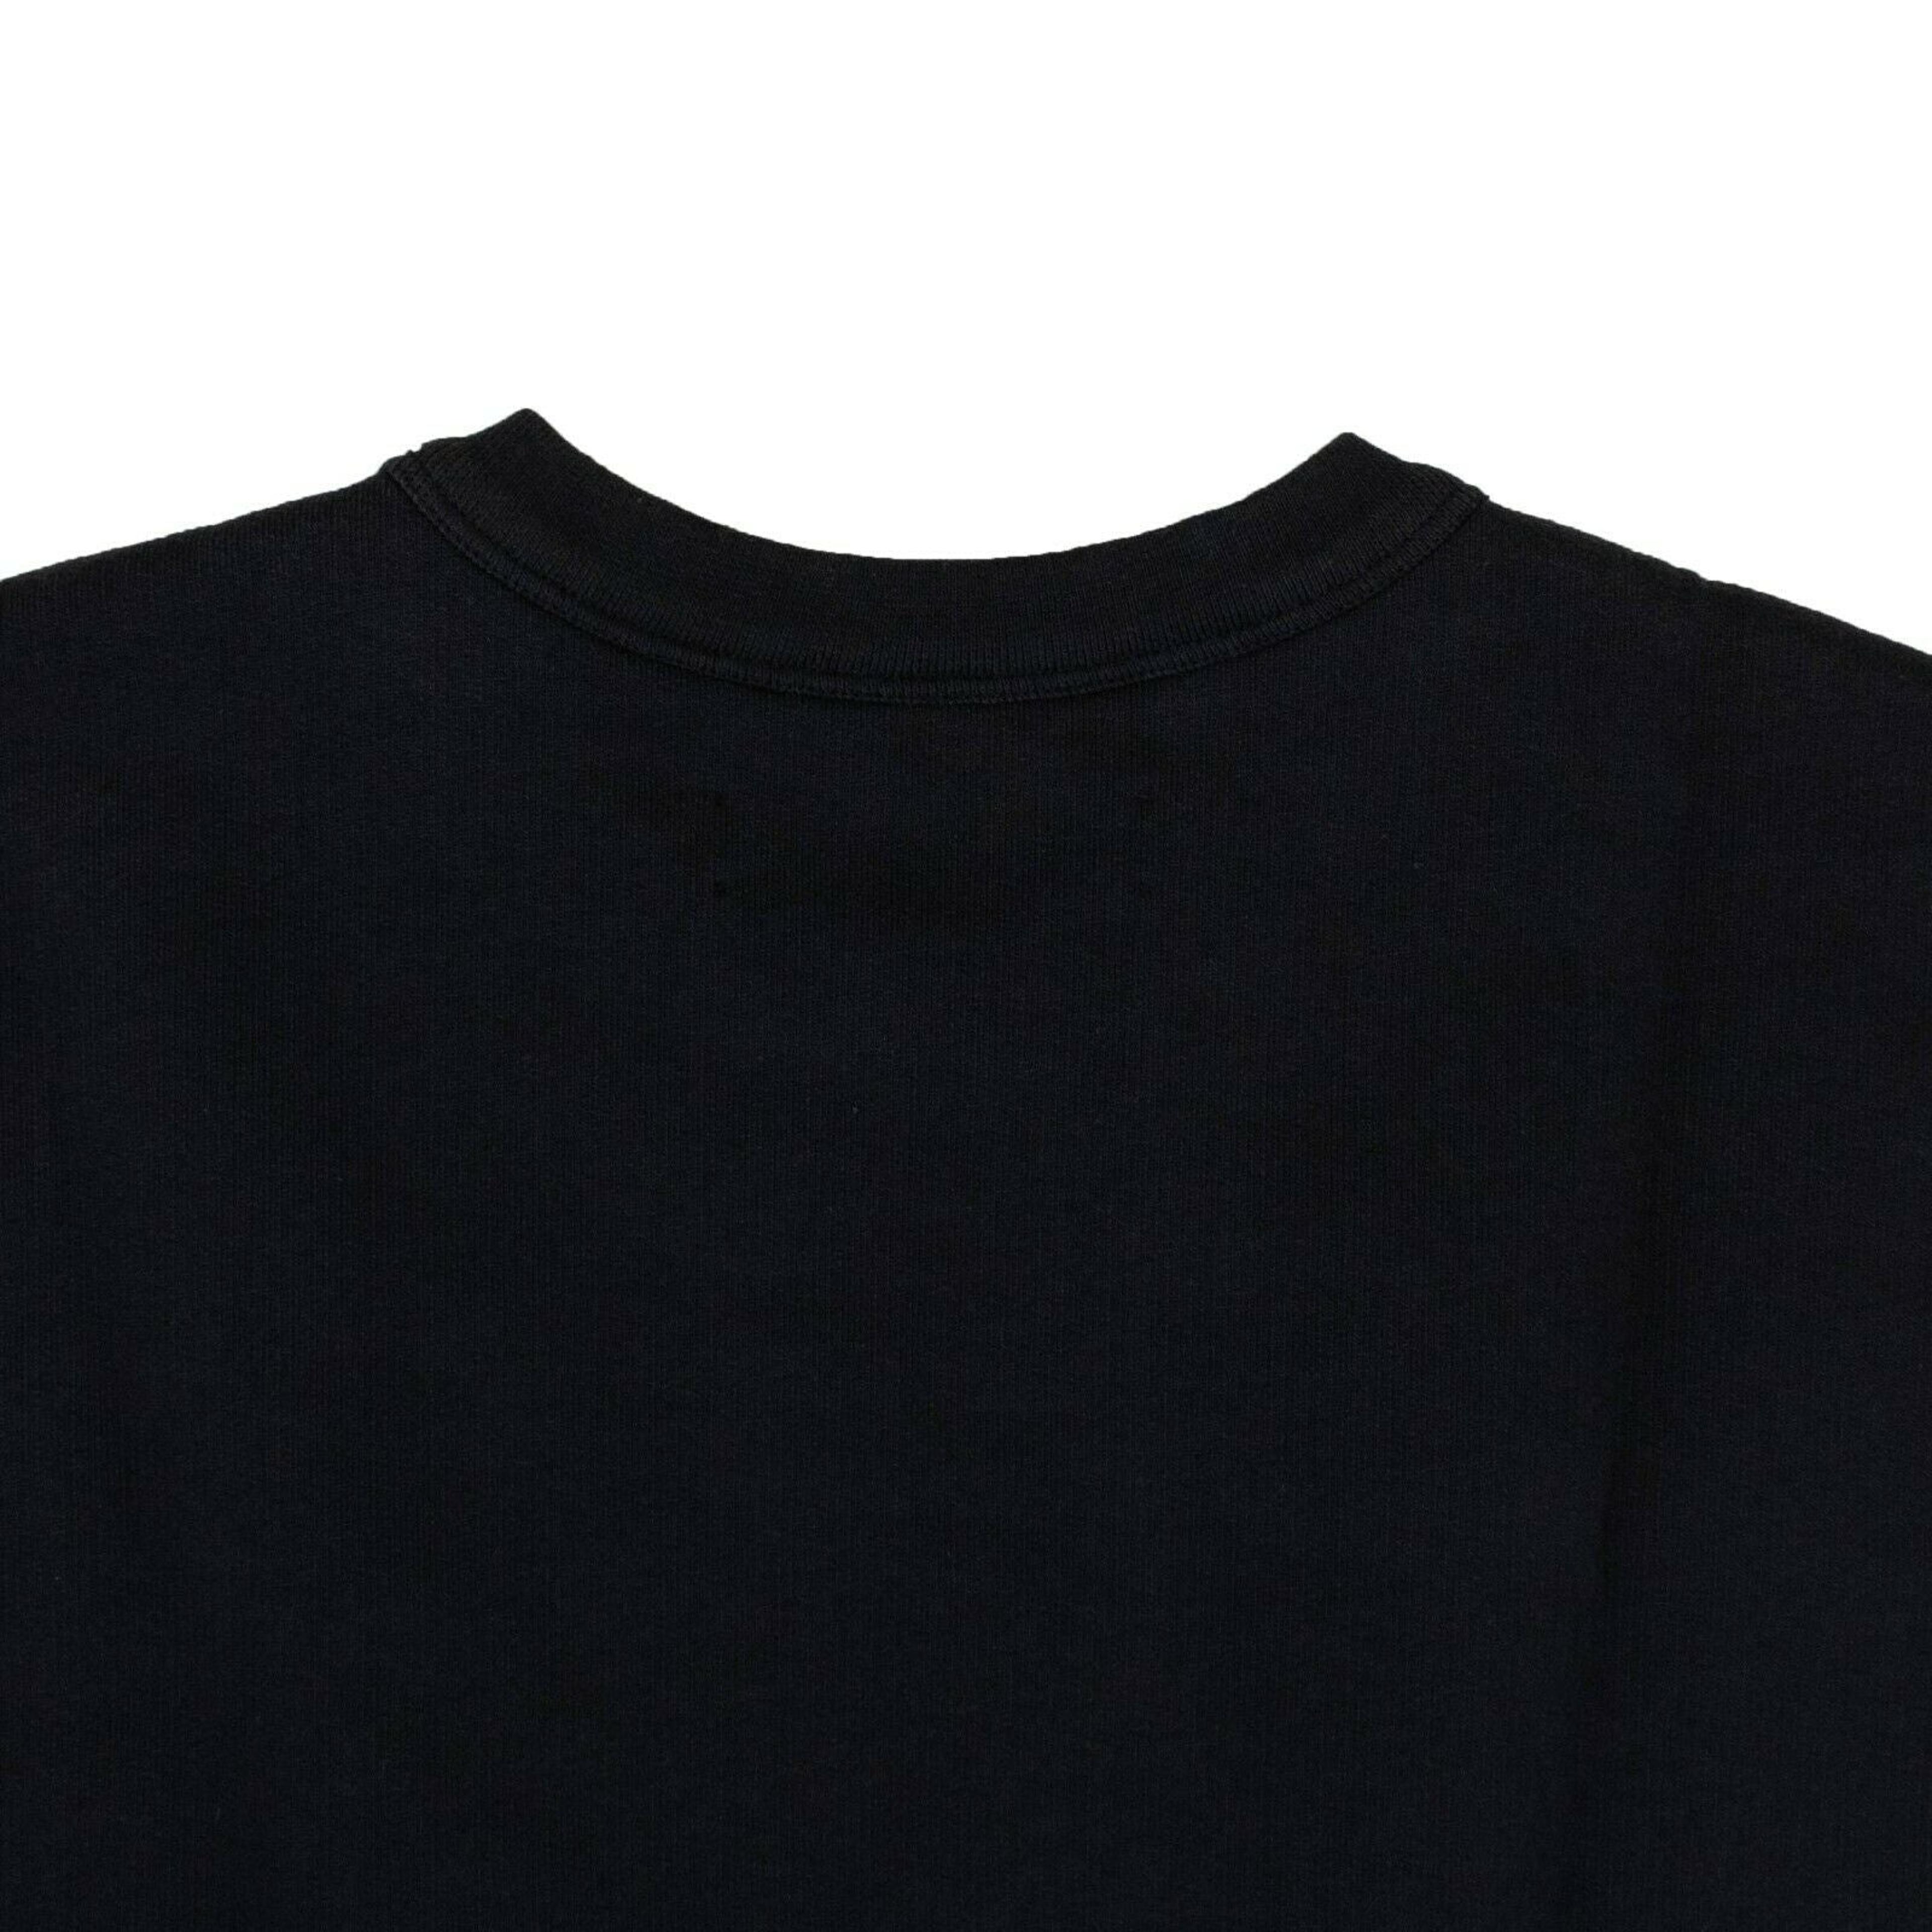 Alternate View 3 of Navy Blue Cotton Cut-Off Sleeves Sweatshirt